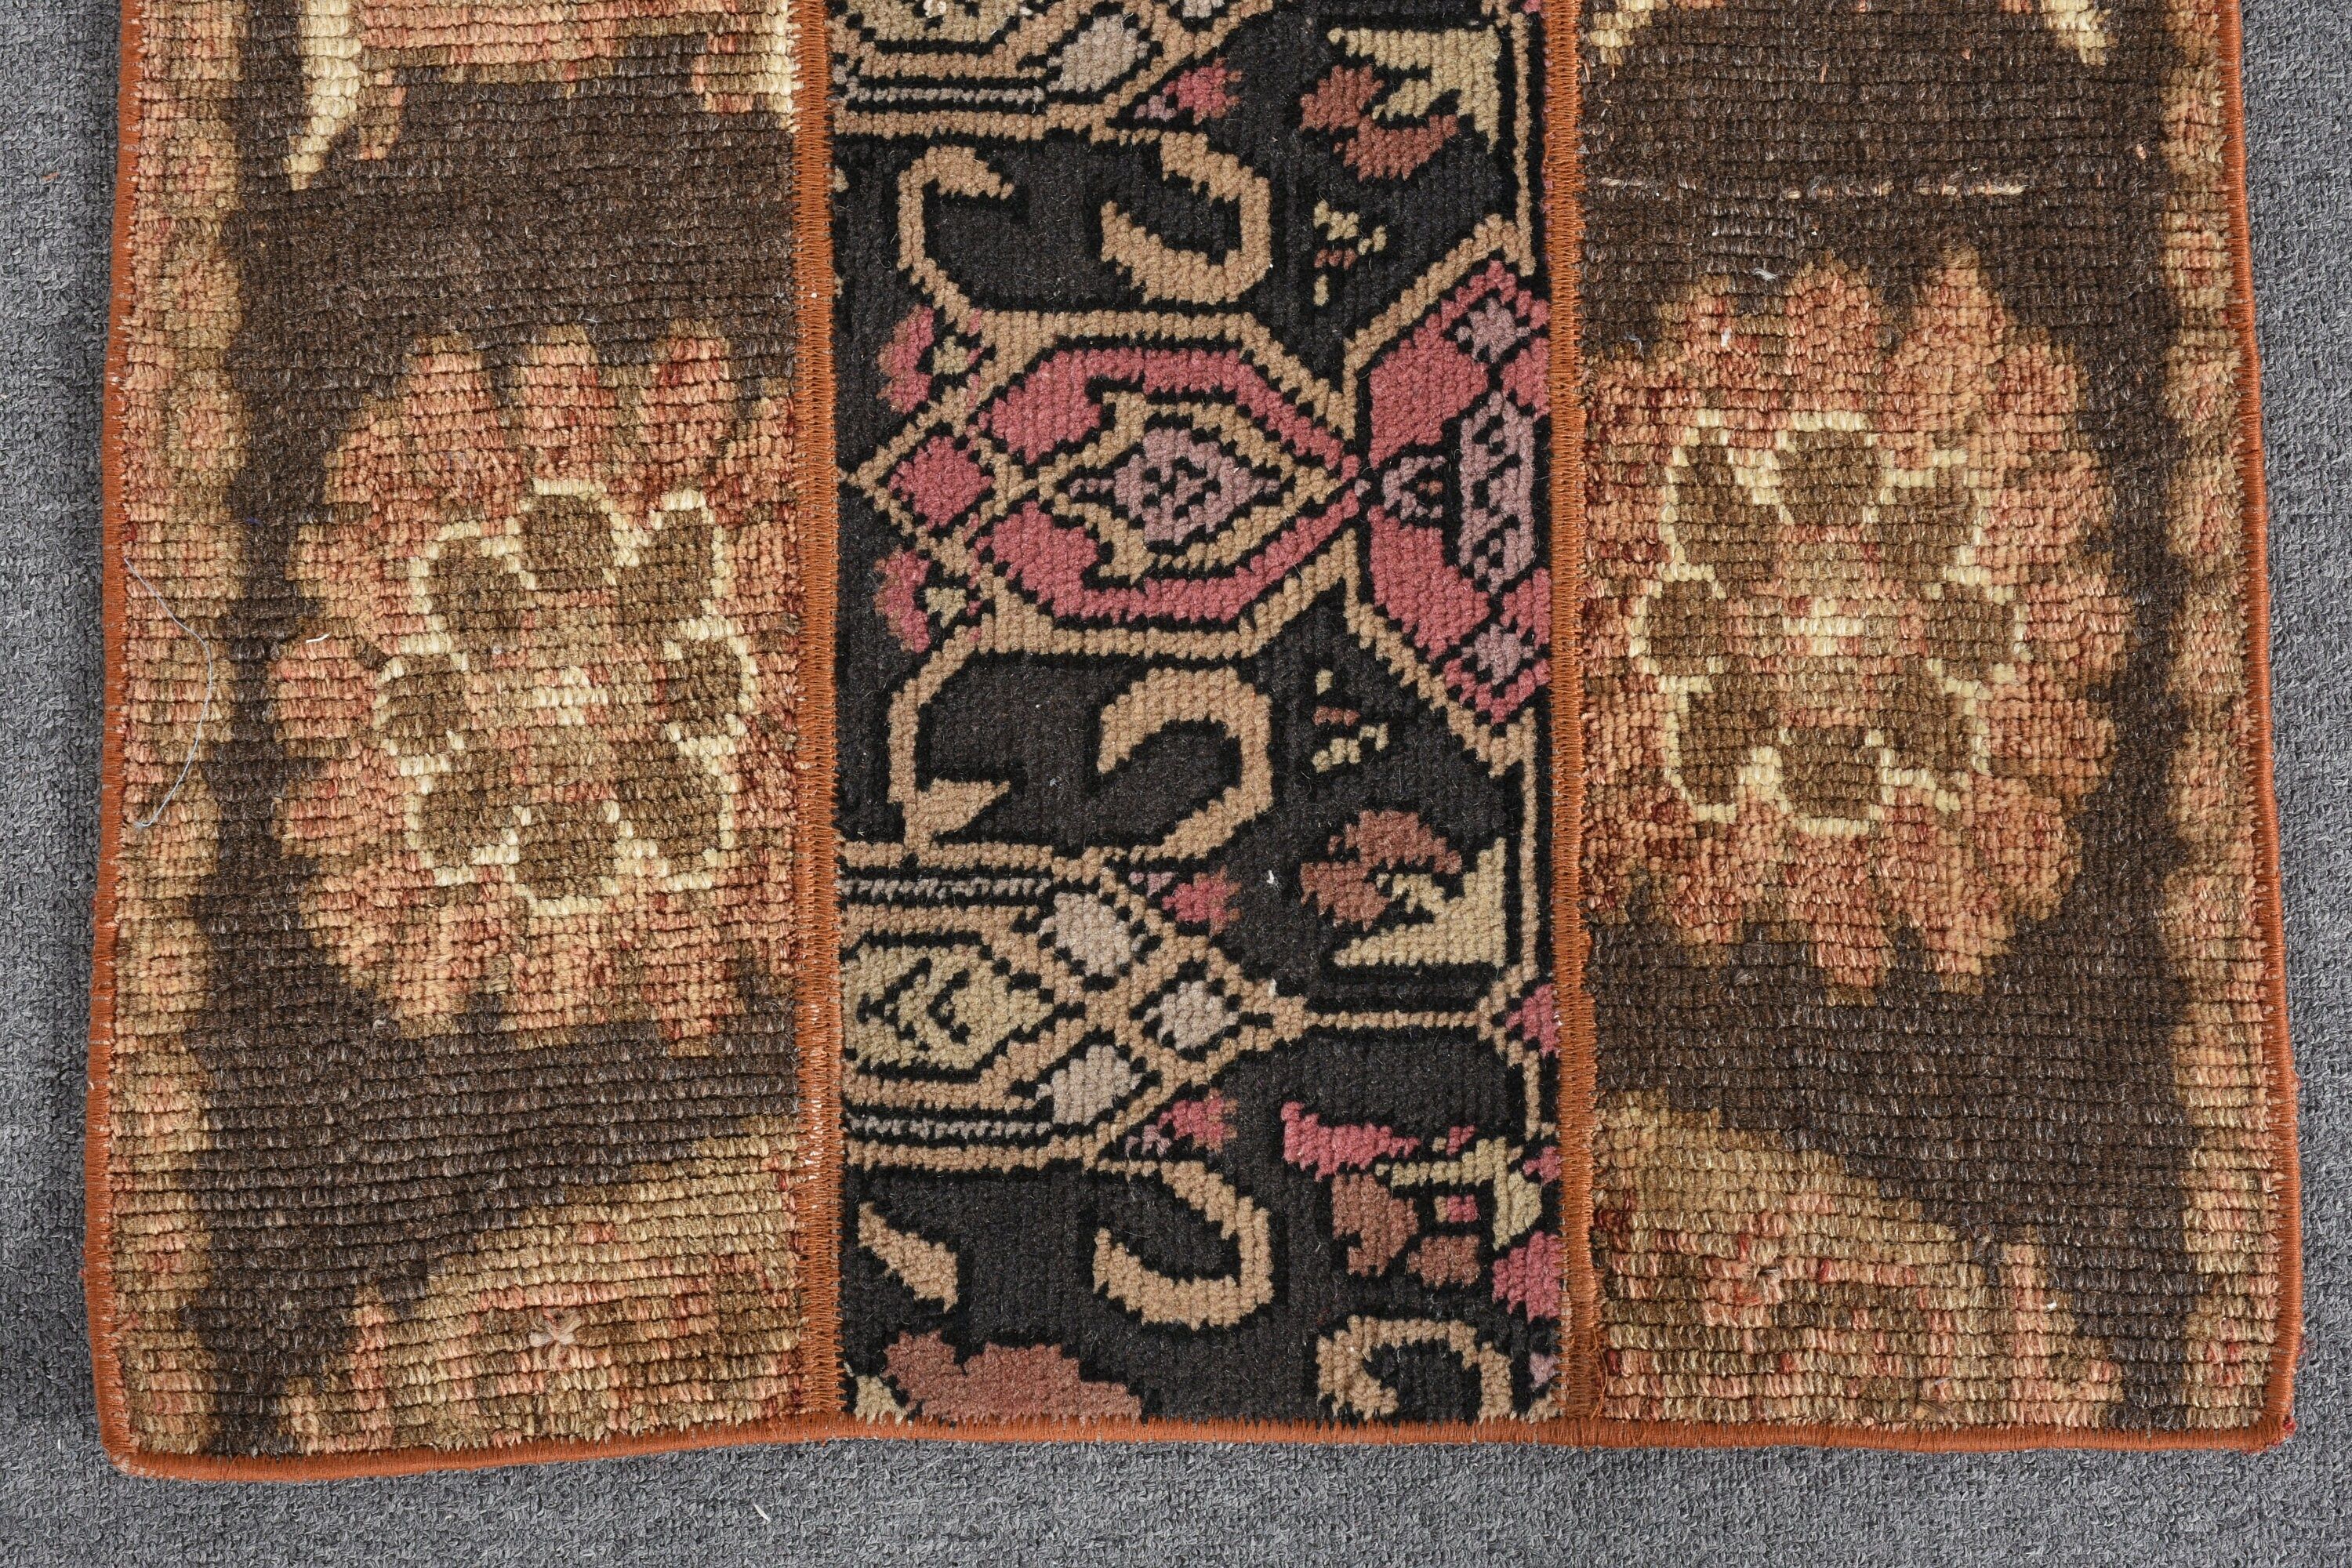 Anatolian Rugs, Turkish Rugs, Wall Hanging Rug, Entry Rugs, Bohemian Rugs, 2x2.9 ft Small Rugs, Vintage Rug, Brown Moroccan Rug, Cool Rug